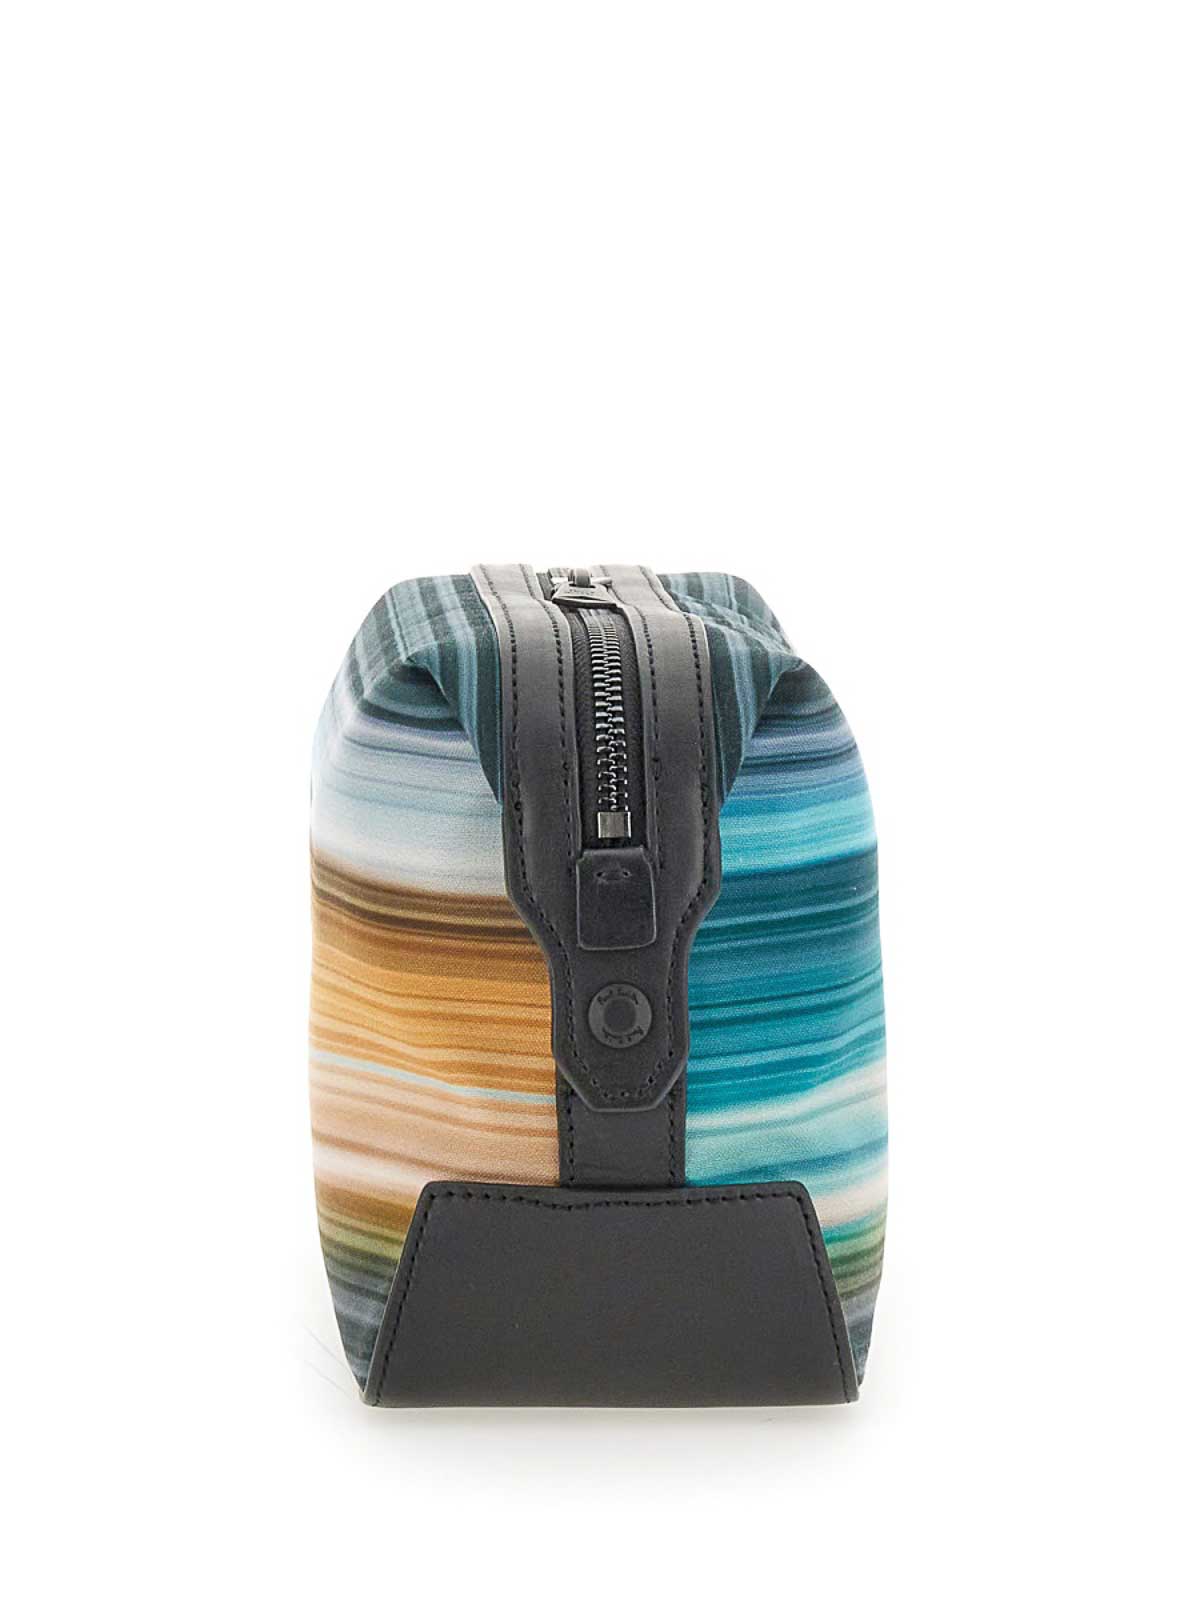 Shop Paul Smith Mini Blur Travel Clutch Bag In Multicolour